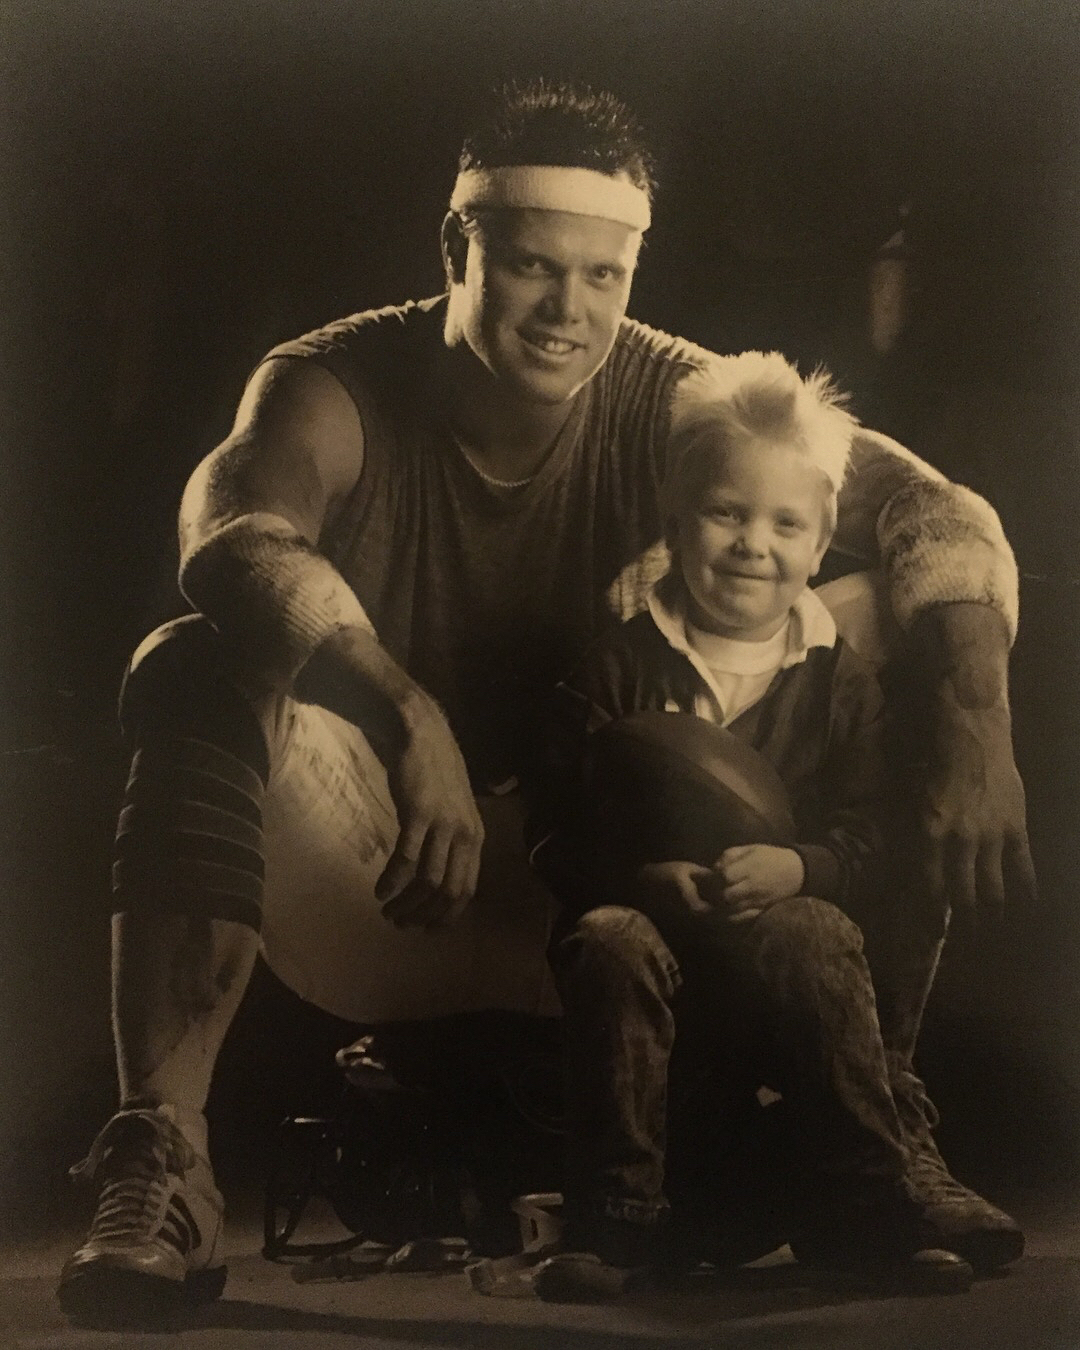 Jim McMahon Posing With His Young Son, Sean